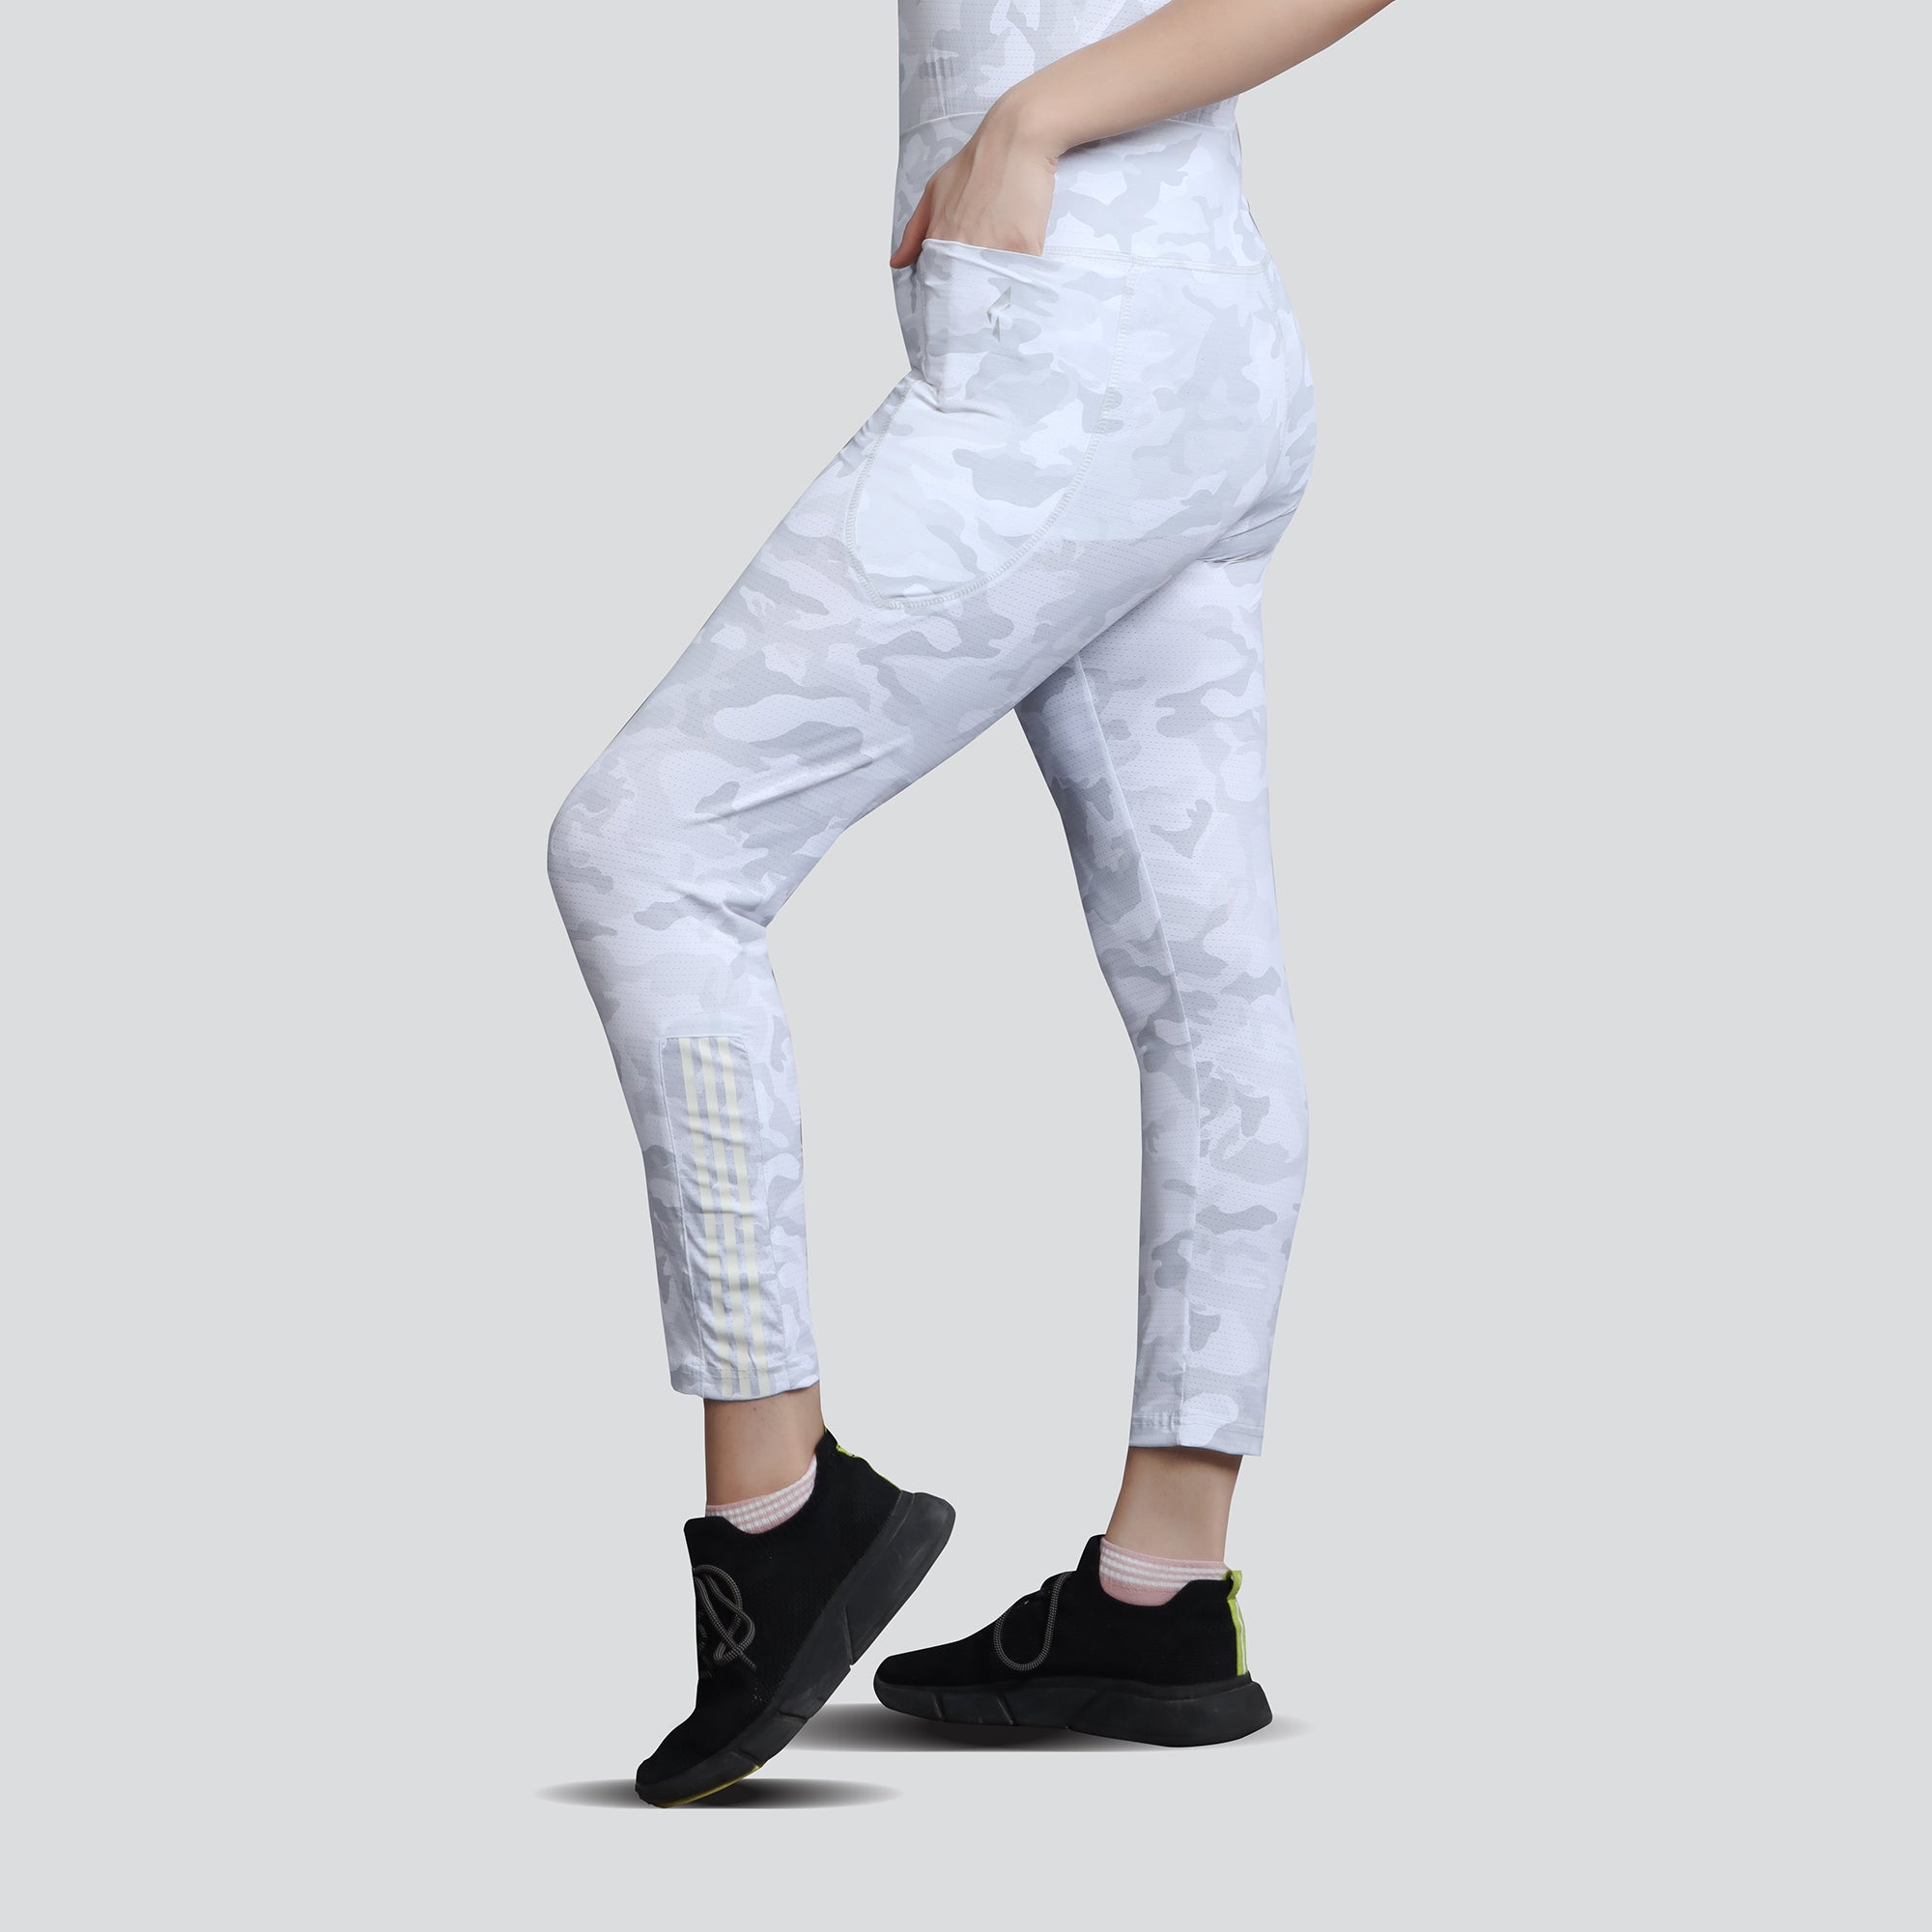 Women's Camo Workout Pants, High-Waisted Stretchable Yoga Leggings - White  - Medium / White